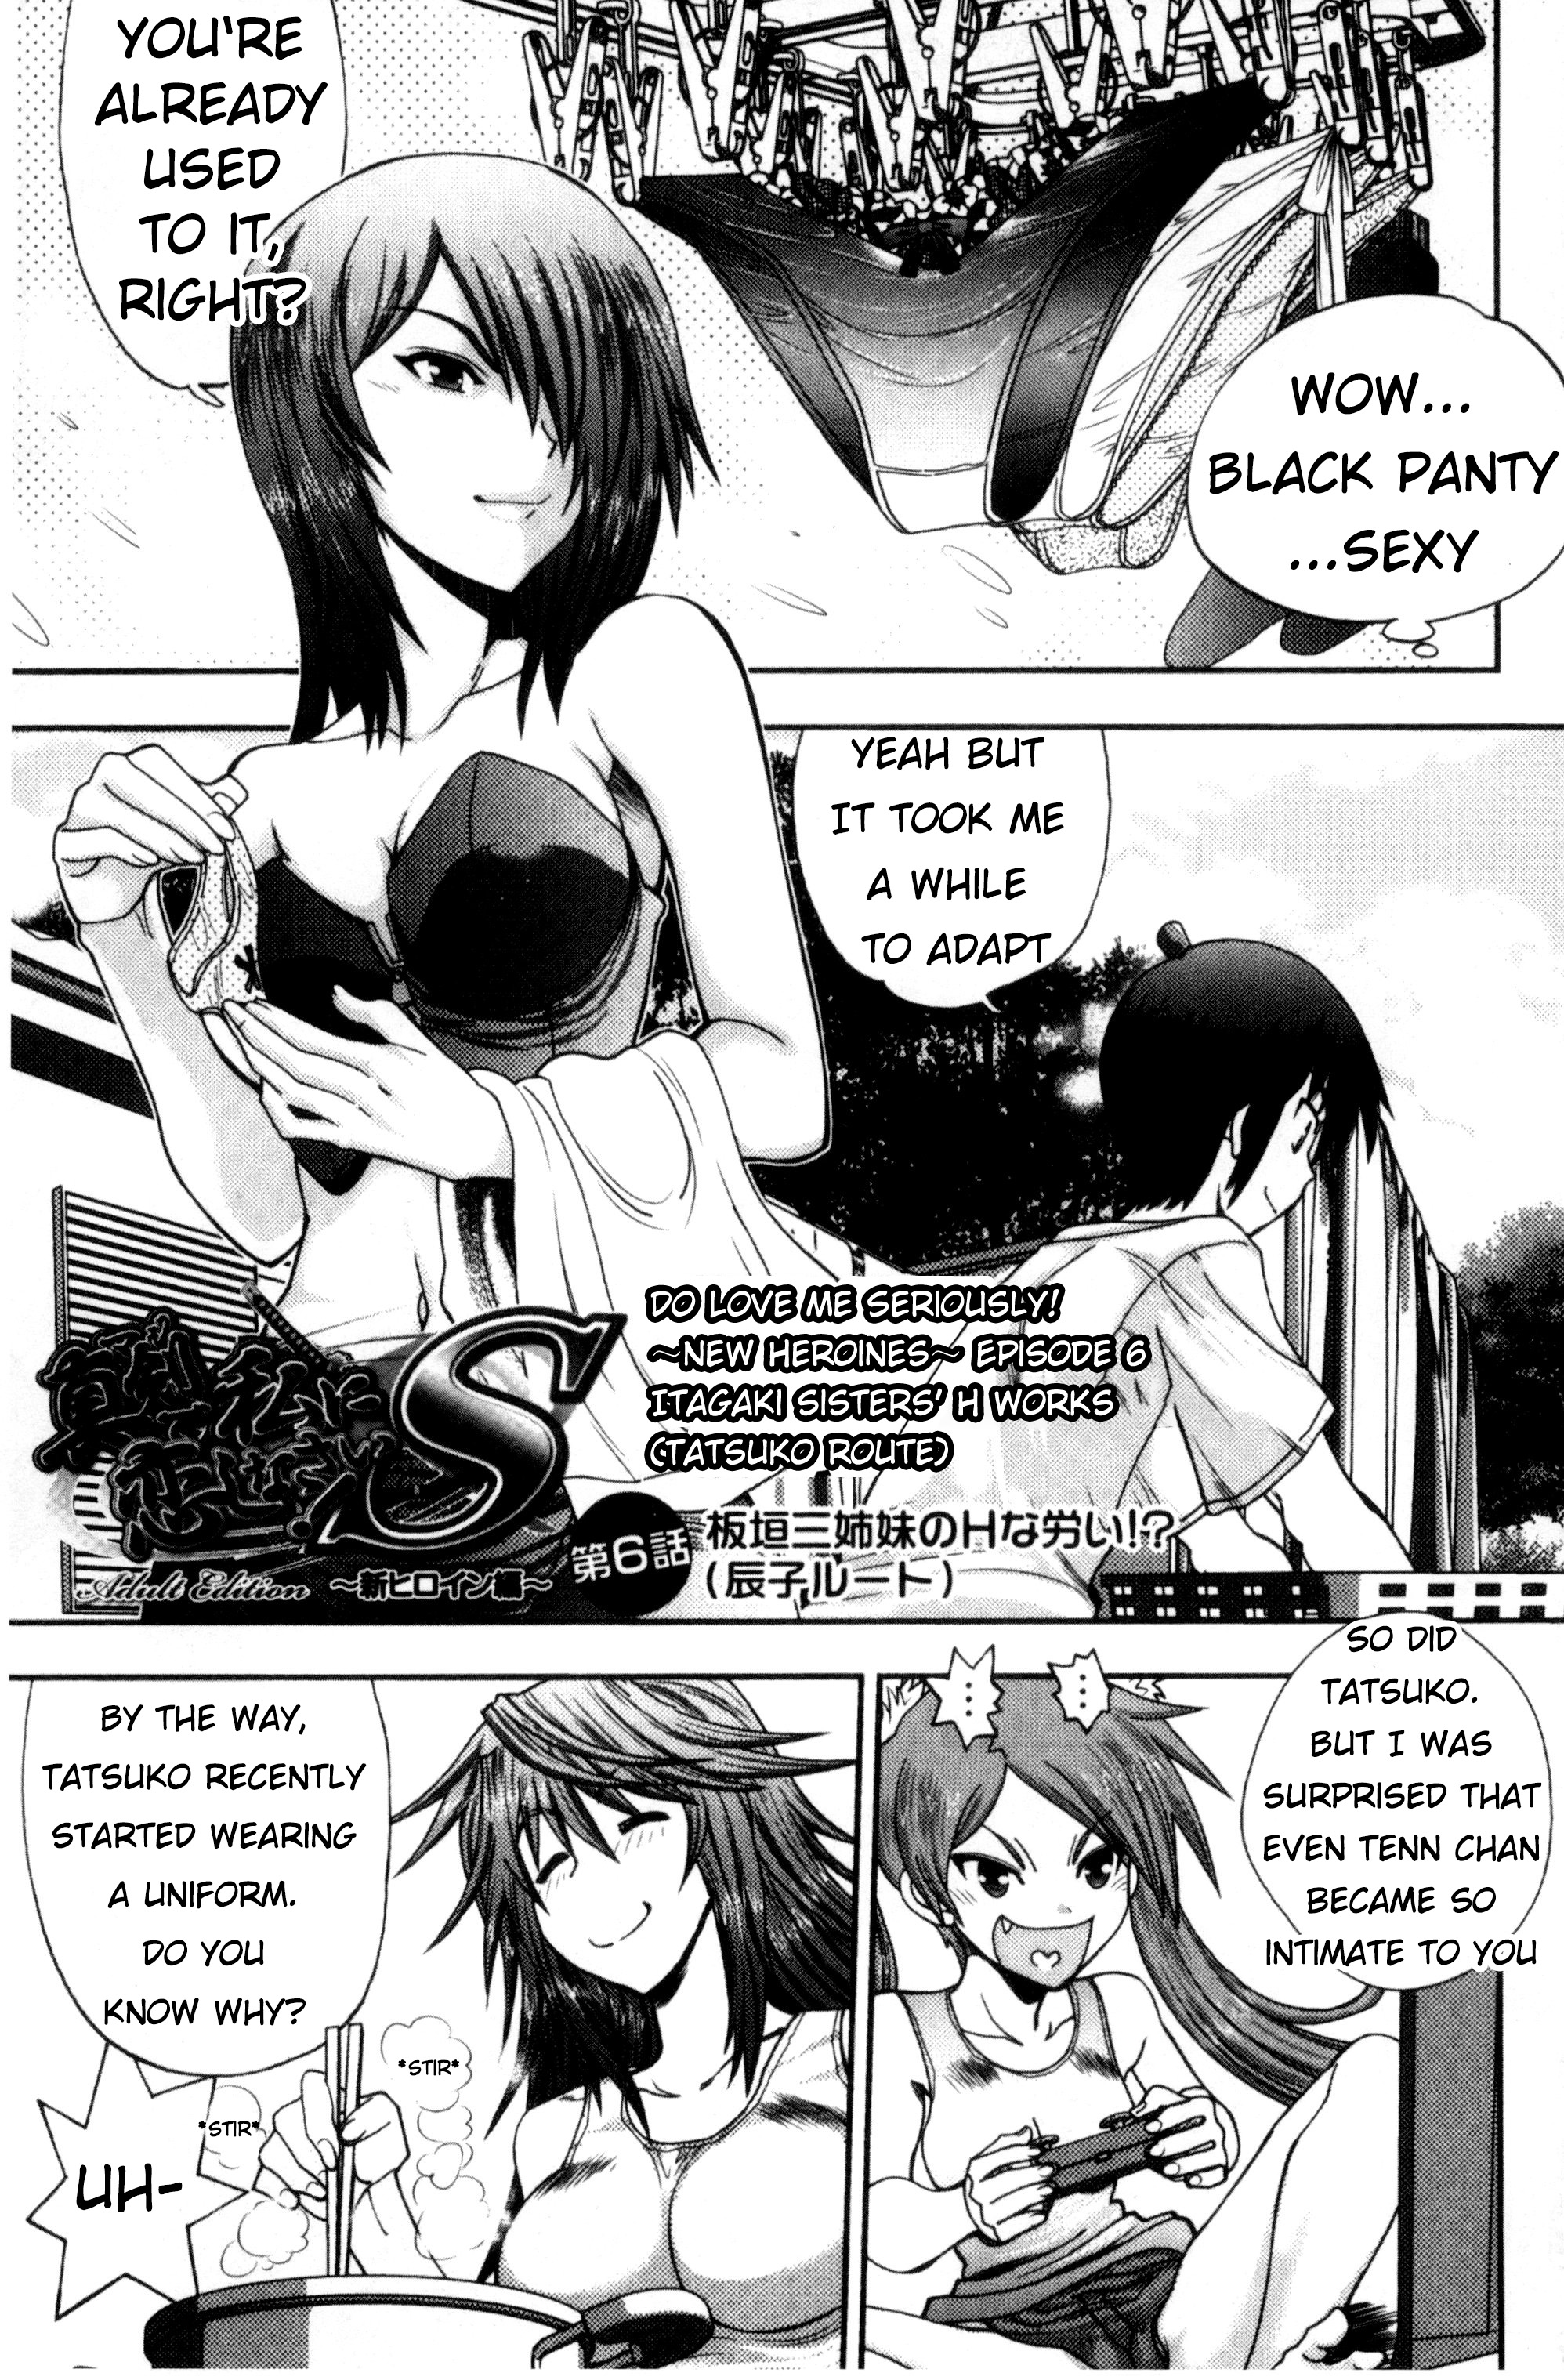 Yagami Dai Shin Heroine Hen~ Episode 6 Itagaki Sisters' H works Hentai Comics